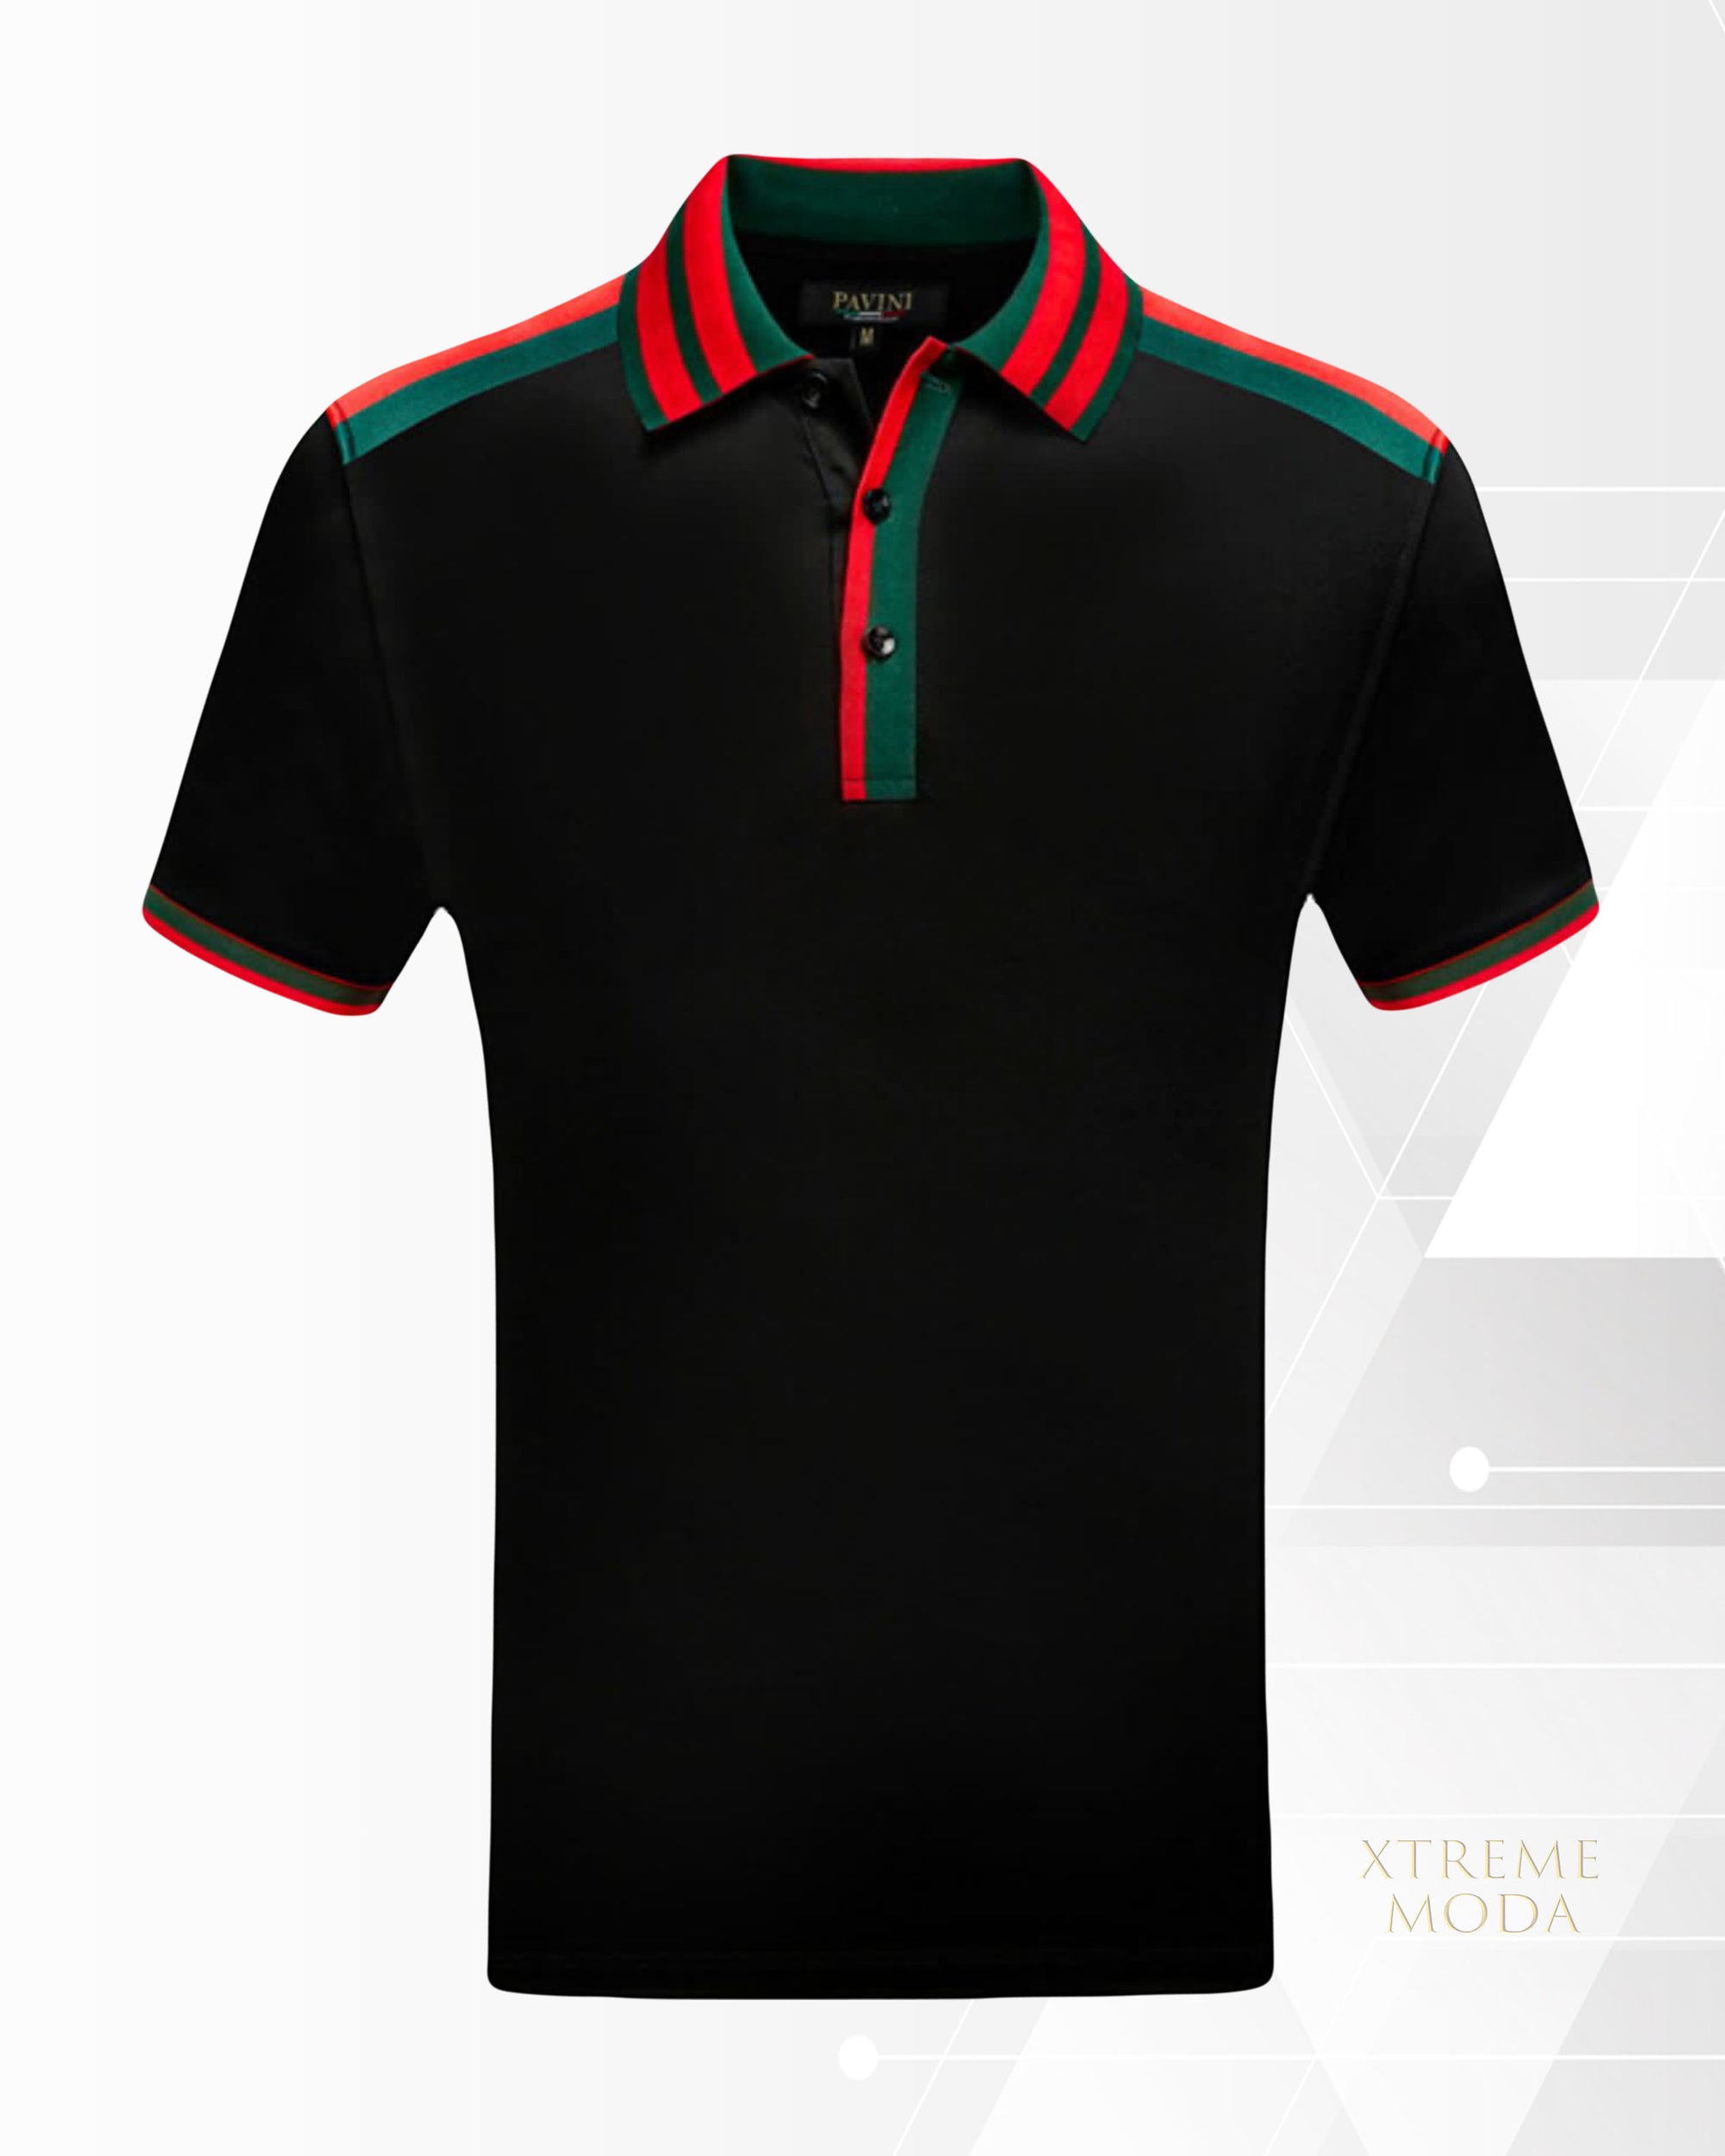 Fashion itay design polo shirt